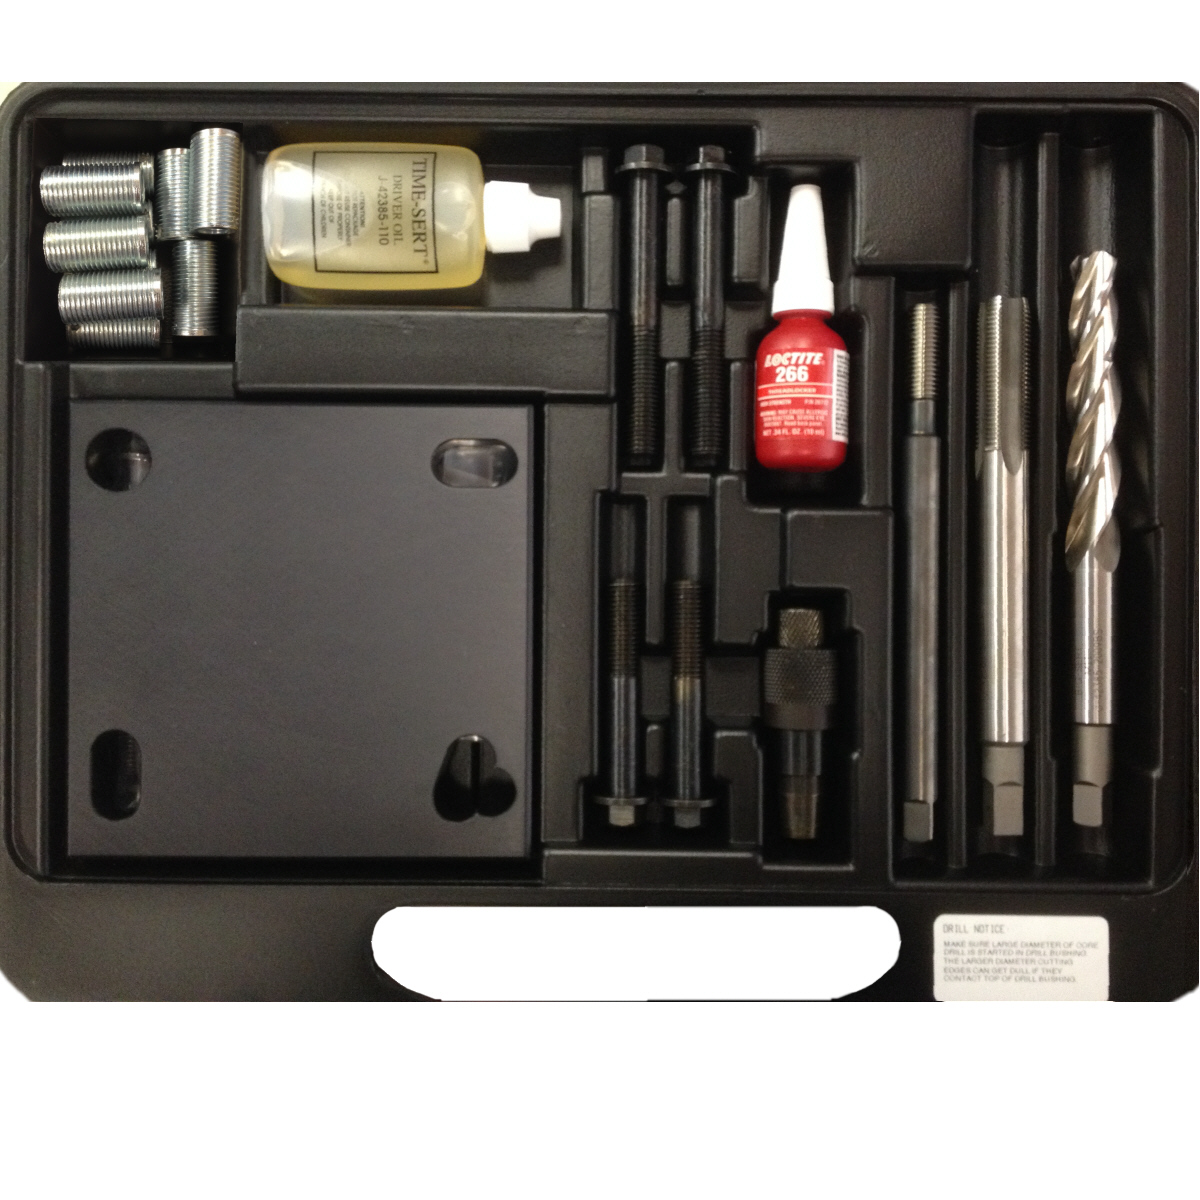 TIME-SERT 1115 Metric Thread Repair Kit M11x1.5 with Inserts - Wise Auto  Tools LLC